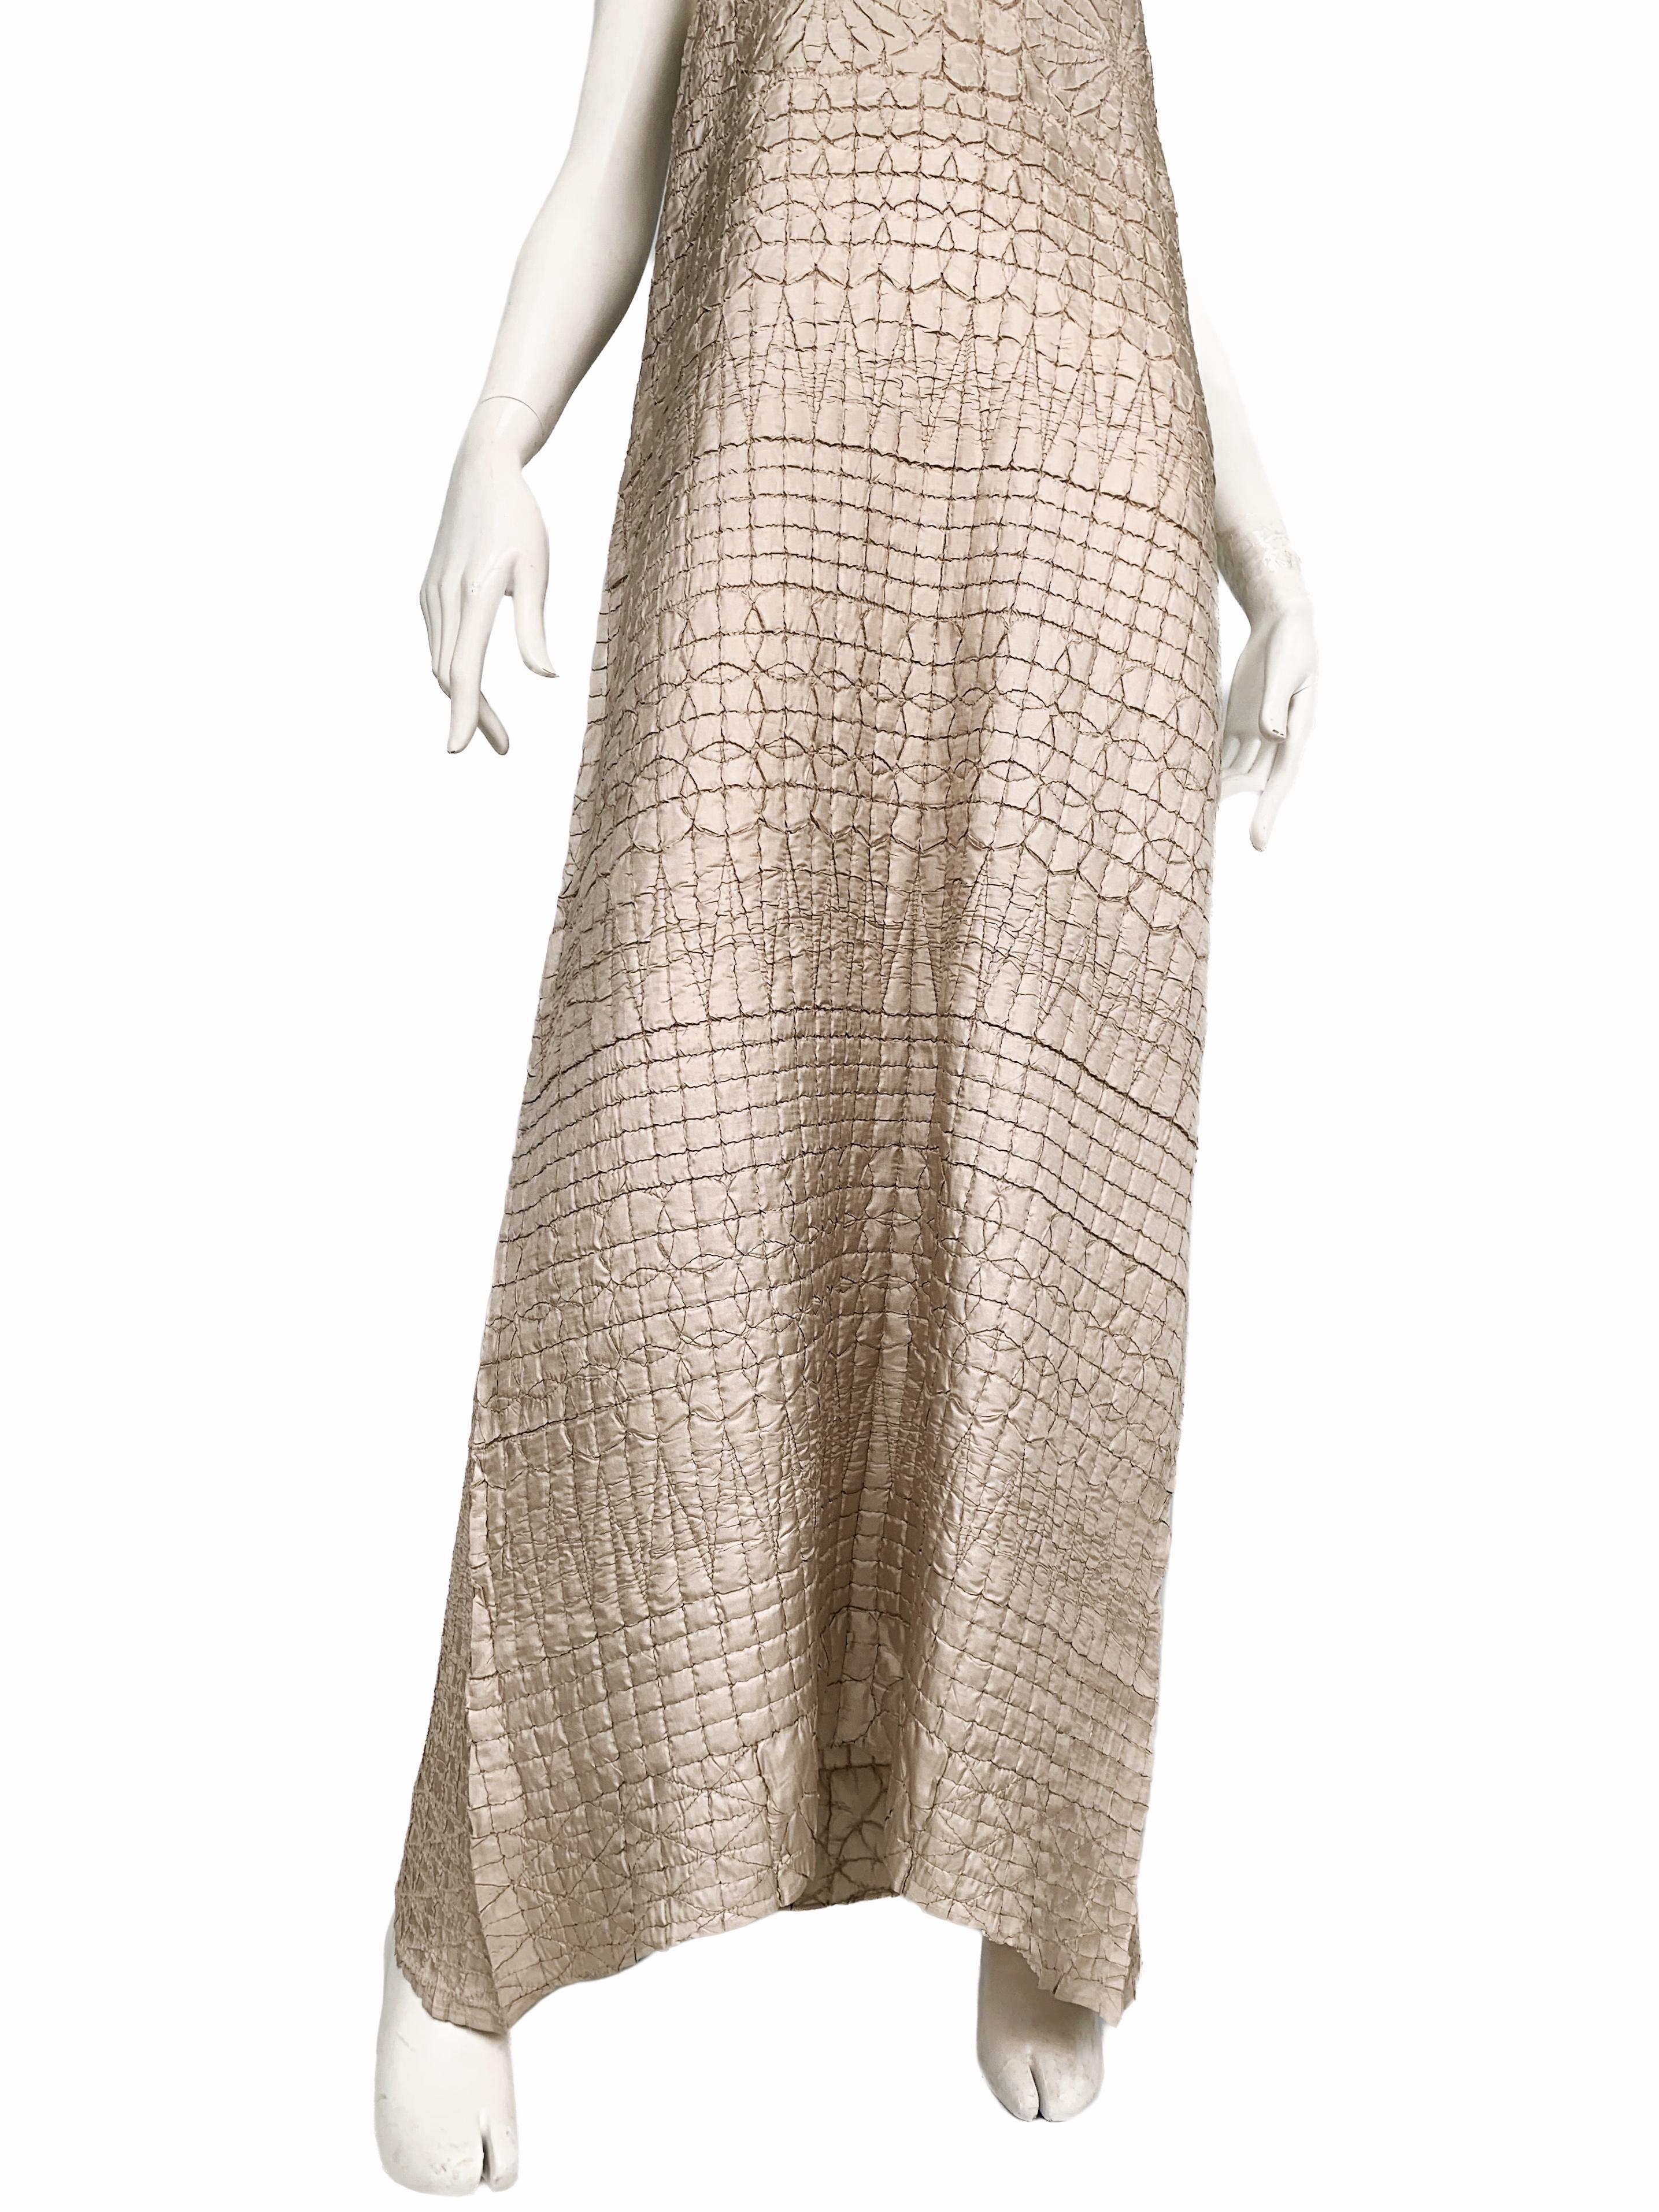 1990s Yoshiki Hishinuma Japanese Innovative Fabric 2-in-1  Skirt, Dress 1